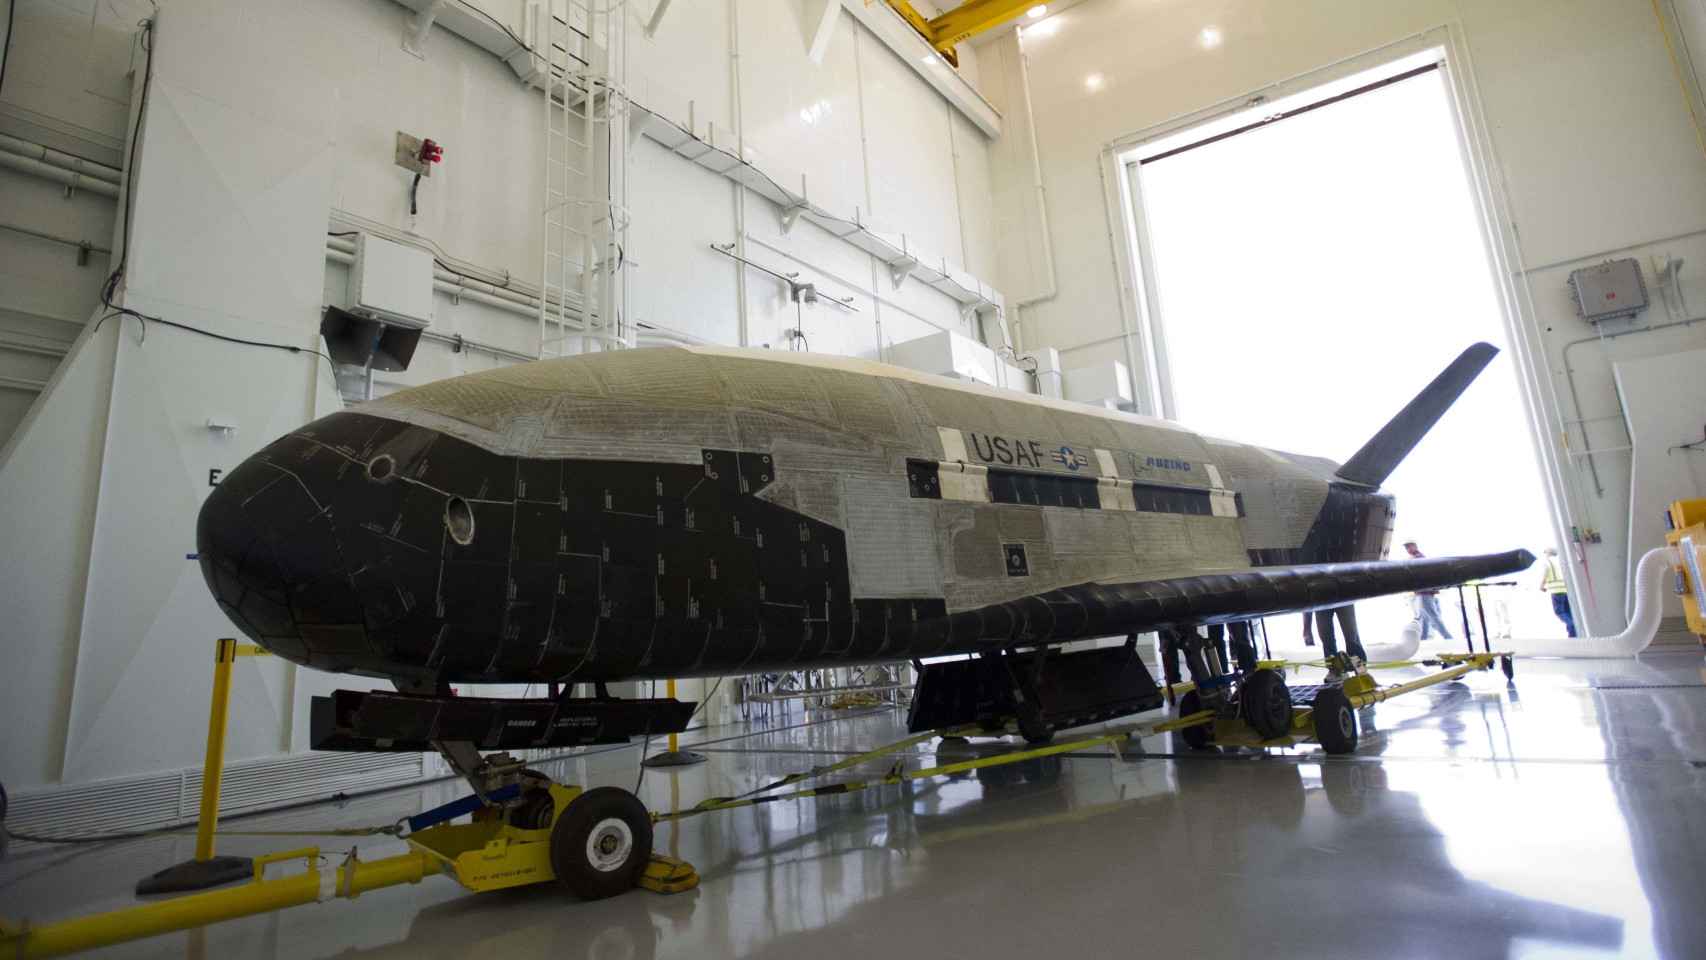 Nave espacial X-37B en el hangar